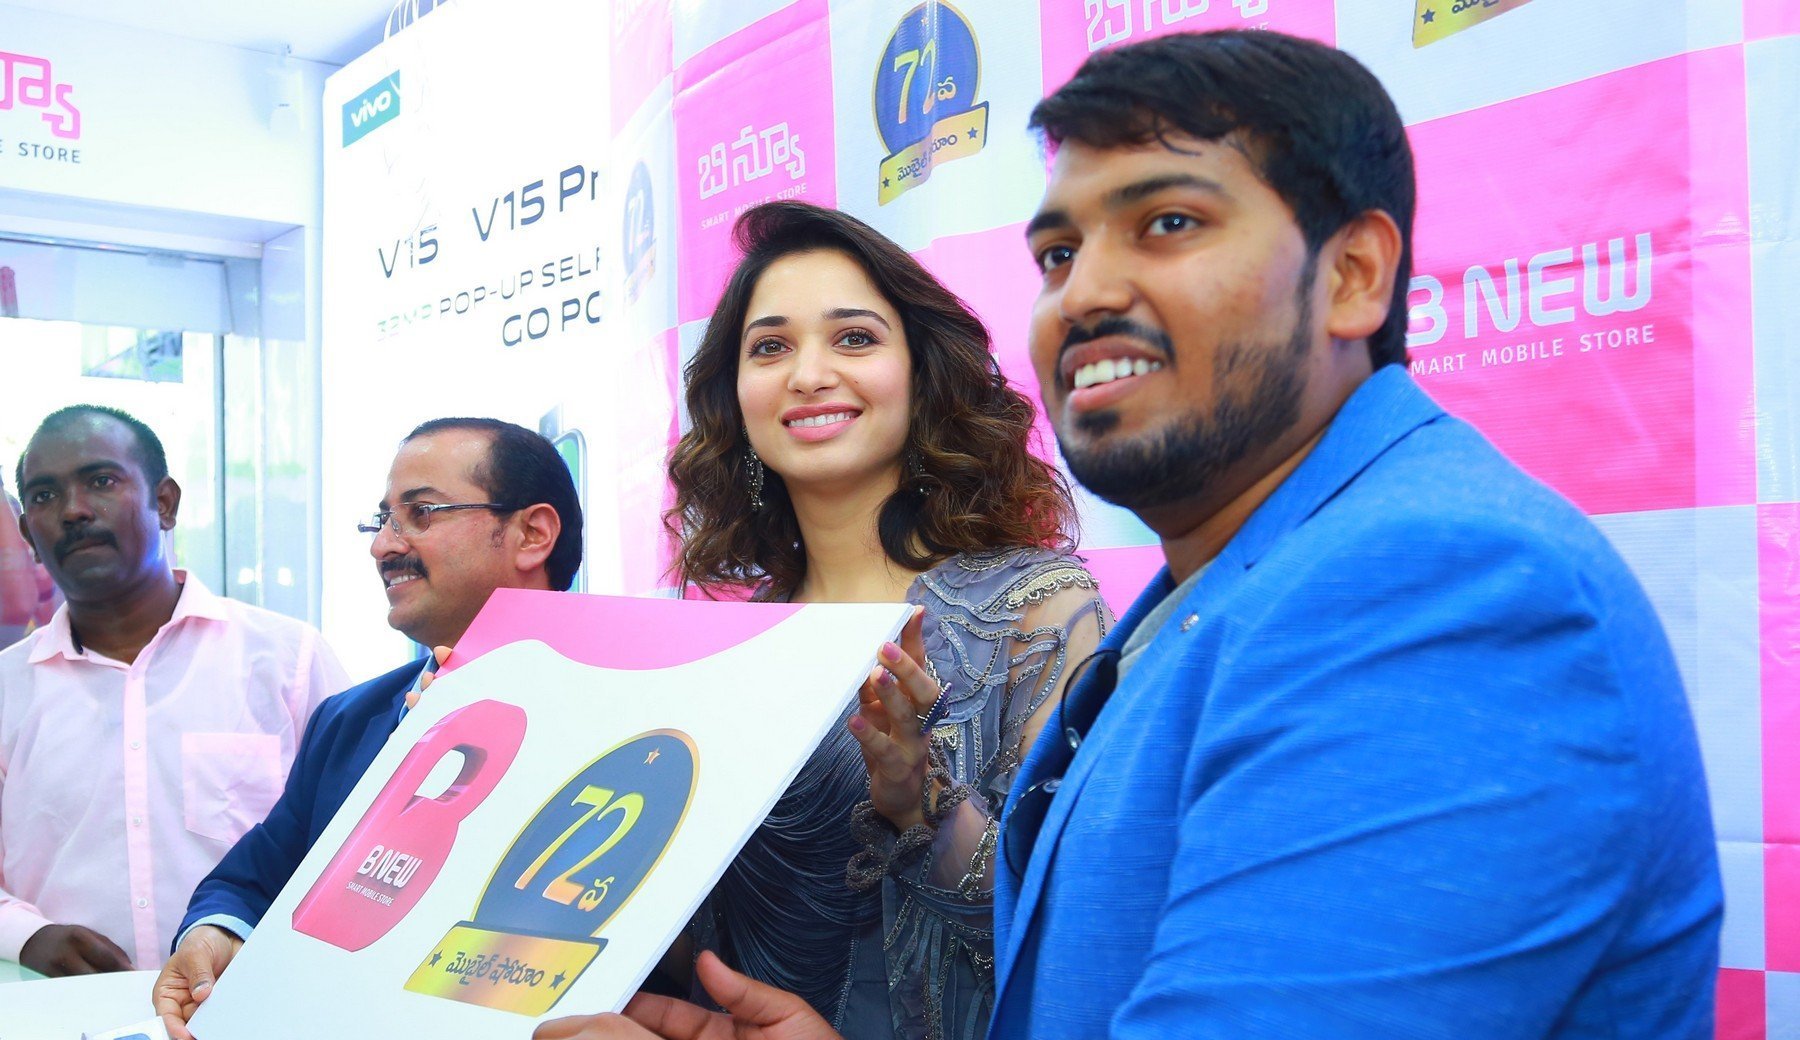 Tamannaah Bhatia Launches B New Mobile Store At Karim Nager Set 3